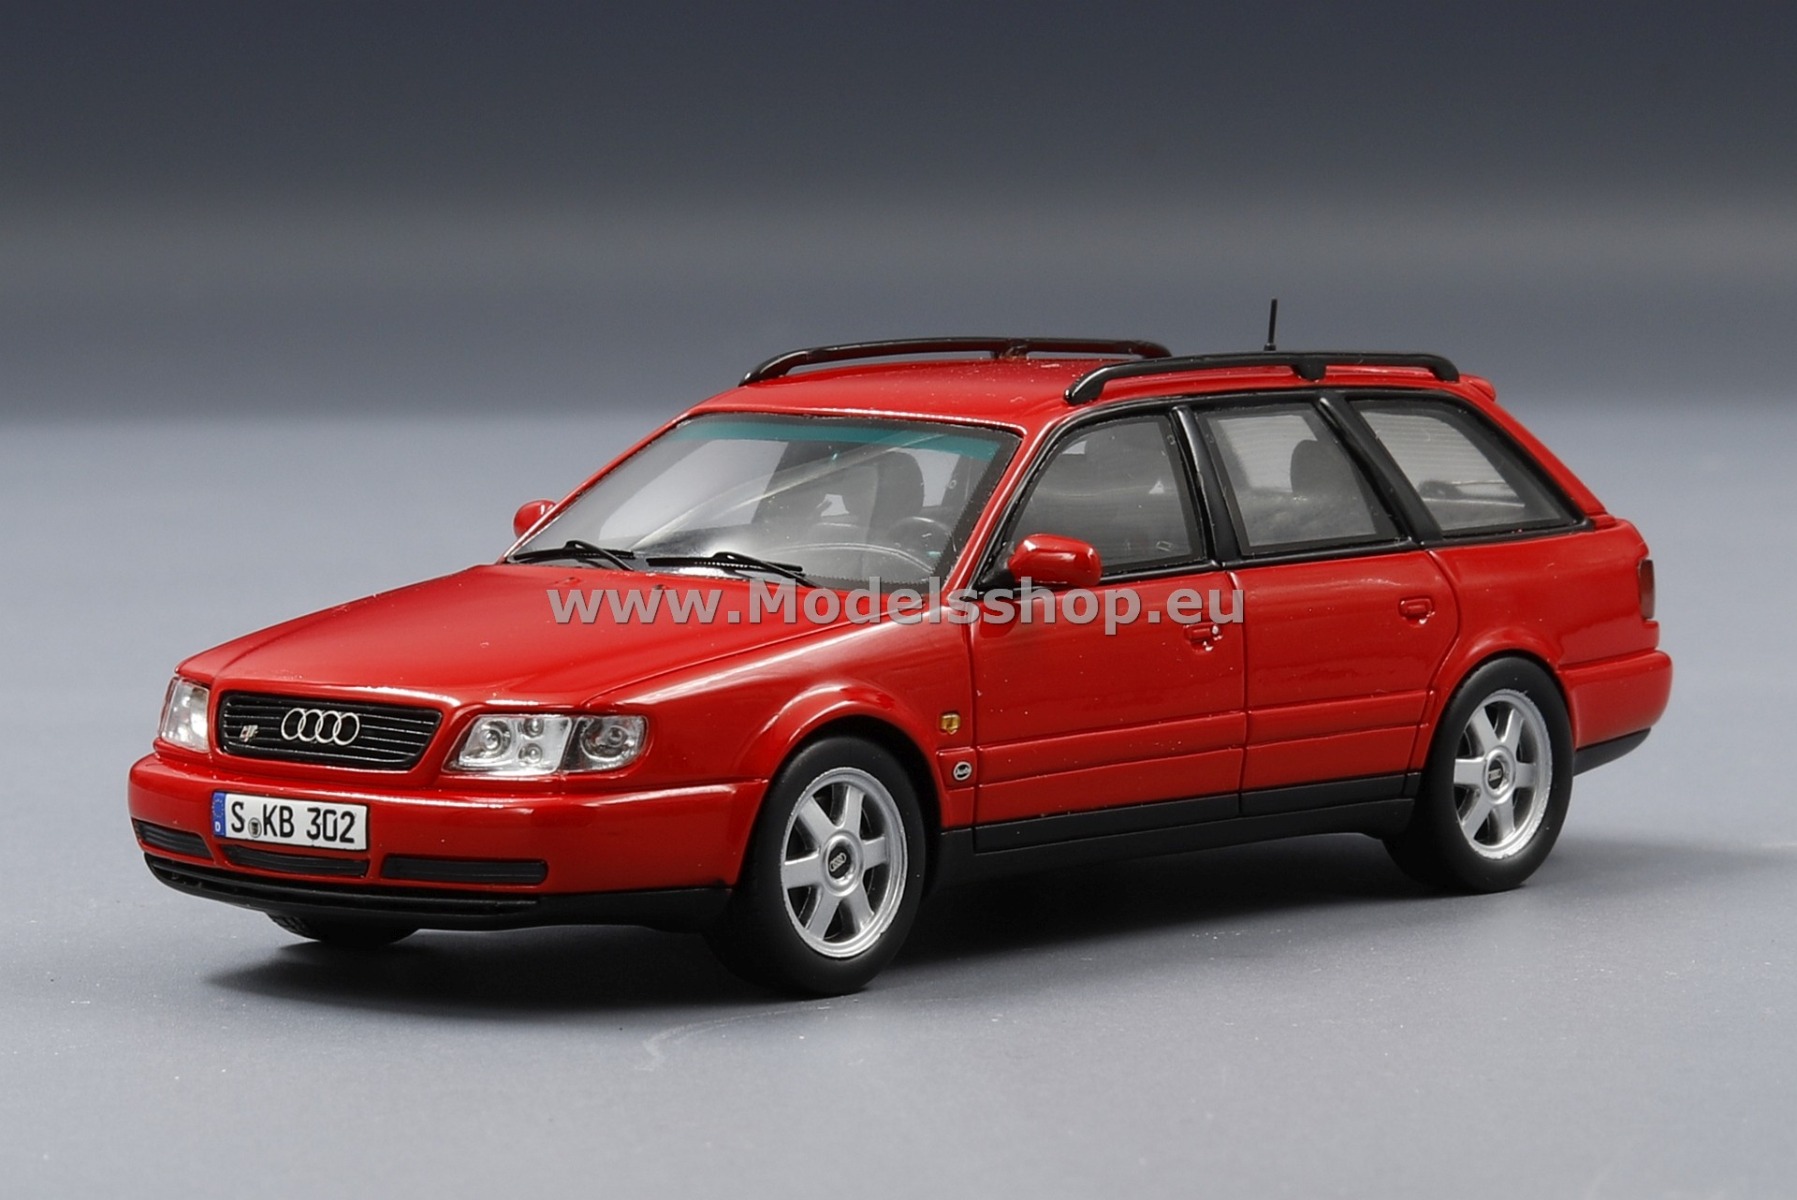 Audi S6 Plus Avant 1996 /misano red/